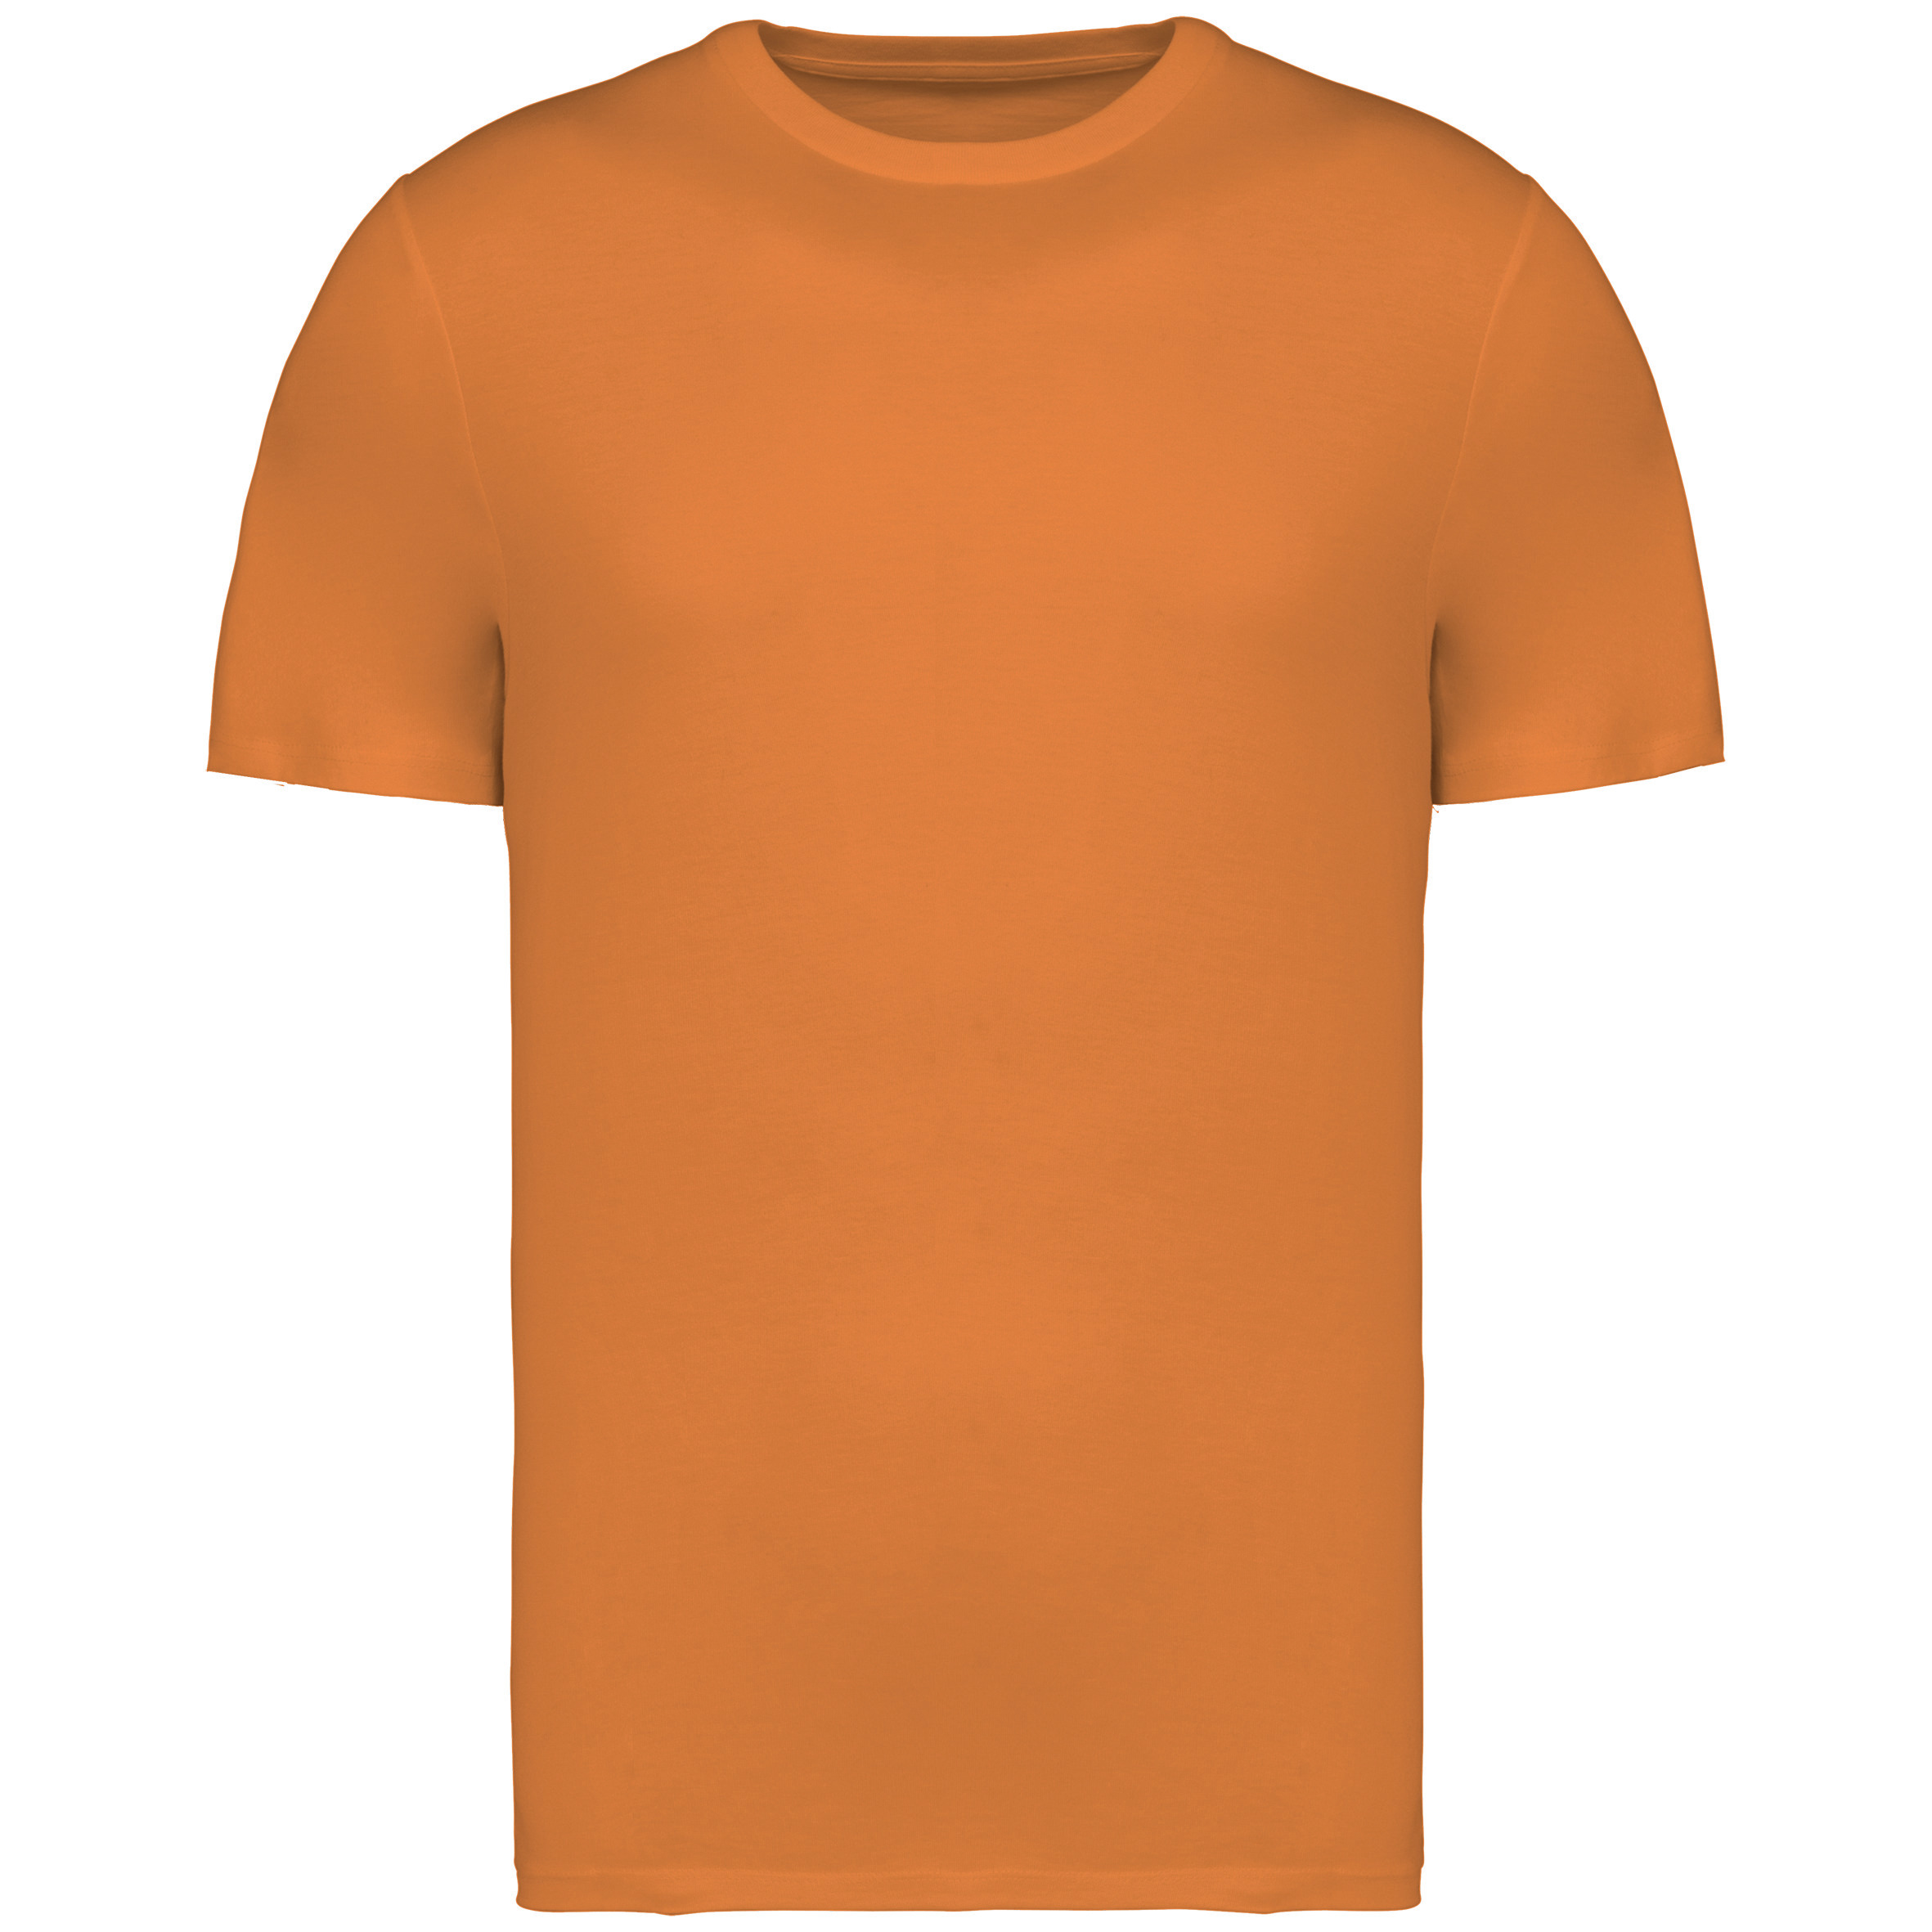 Kwaliteitsvolle T -shirt uniseks, 180gr/m², incl. full color bedrukking.